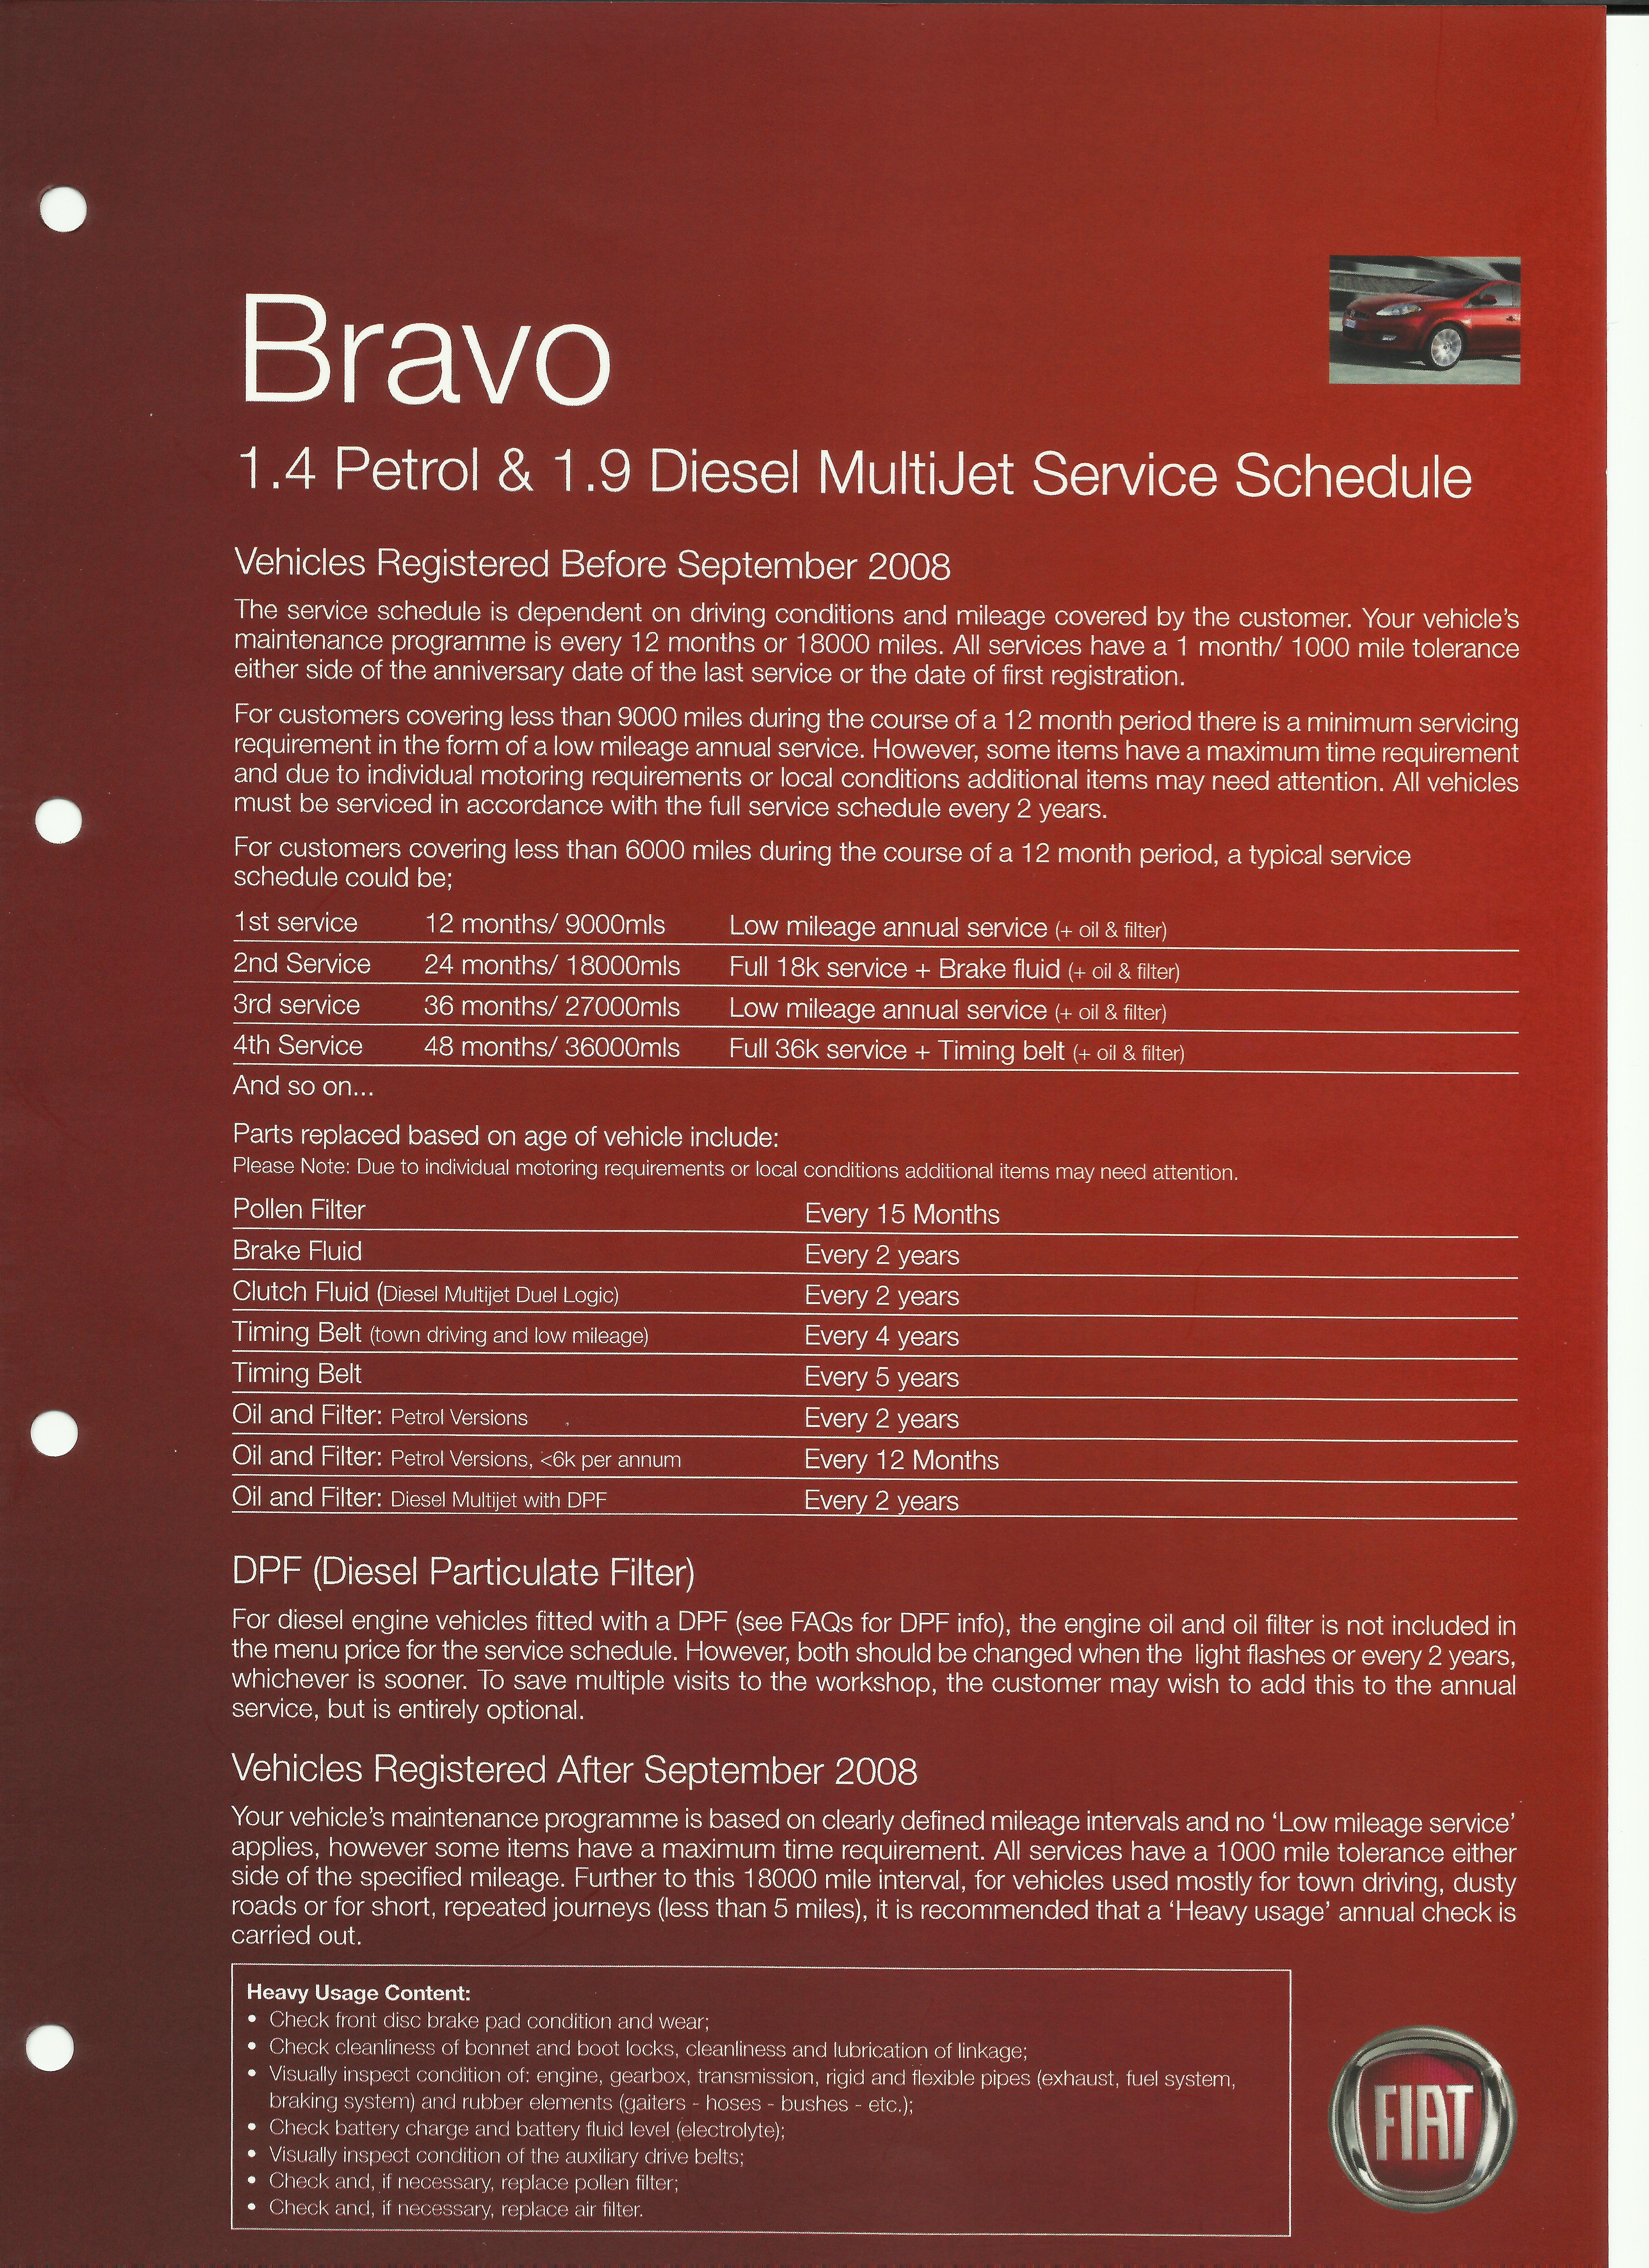 Bravo servicing 1